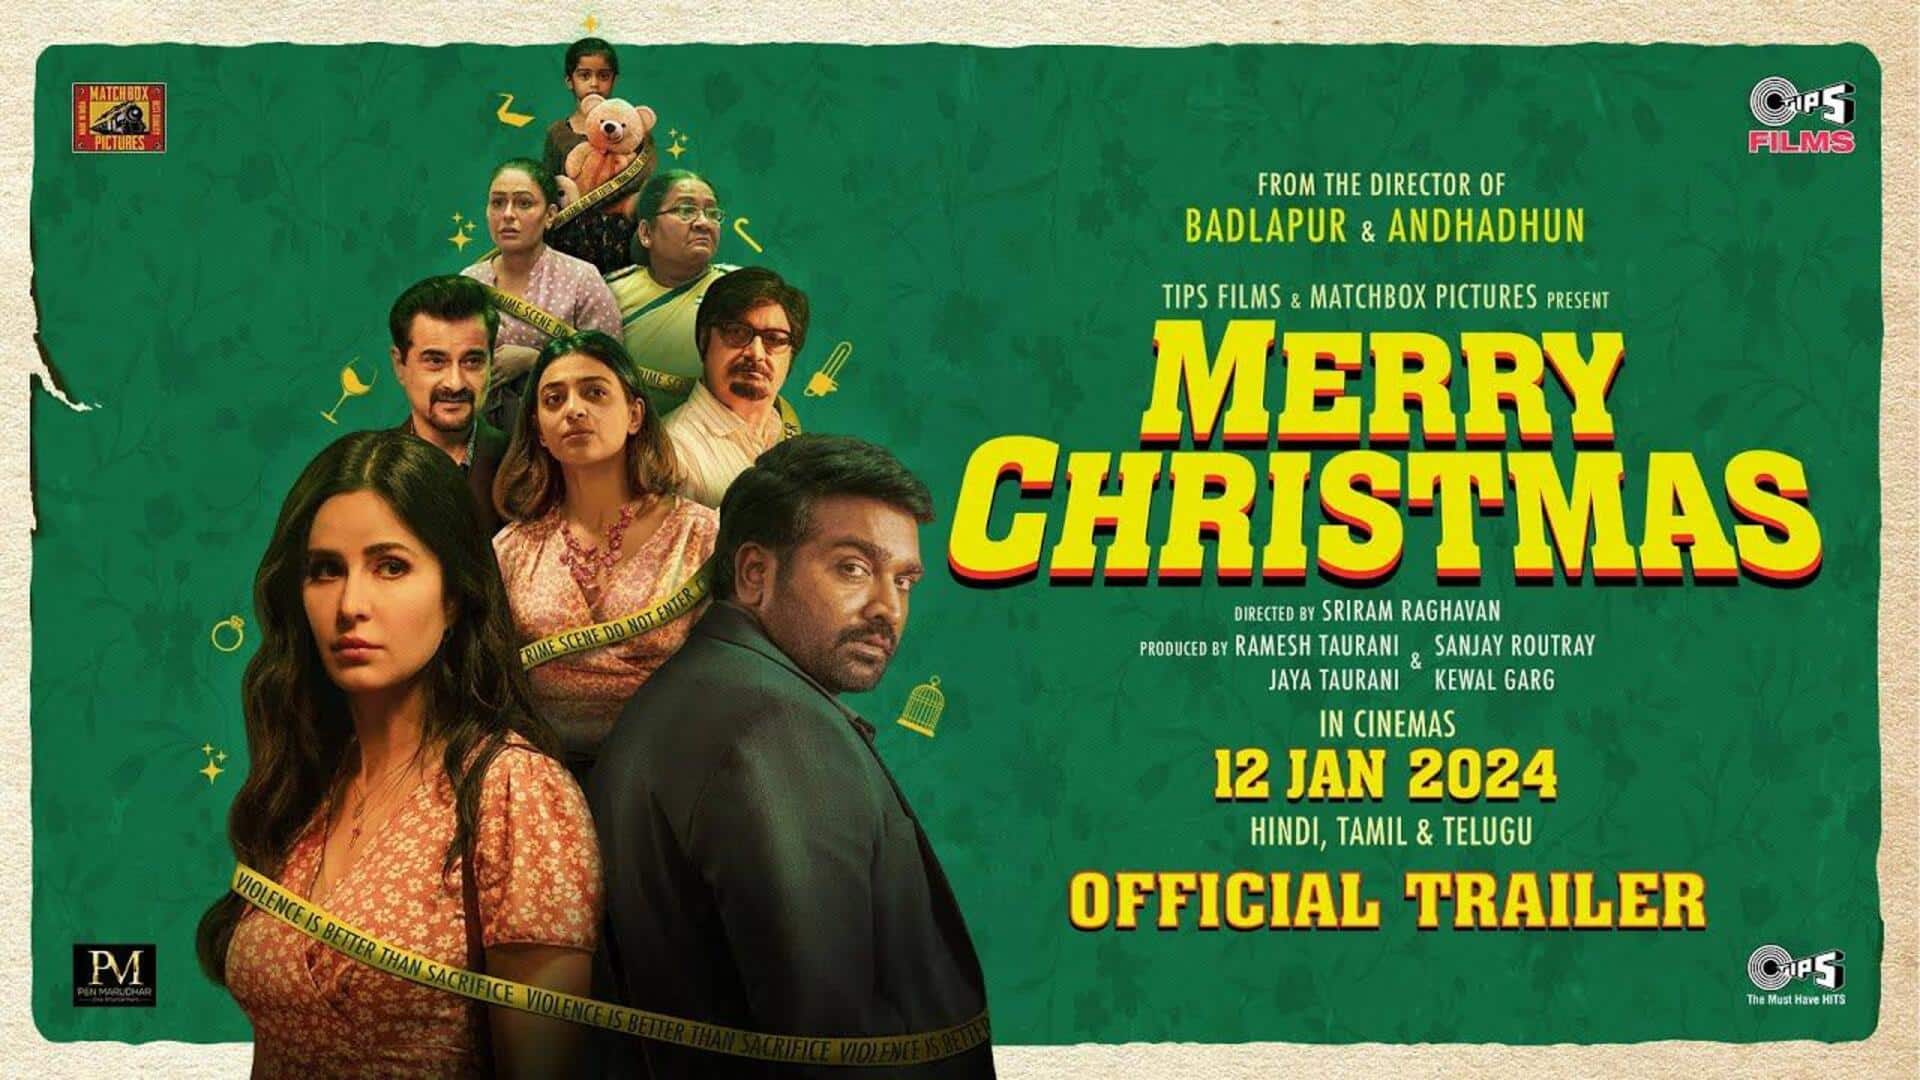 'Merry Christmas': Katrina Kaif-Vijay Sethupathi starrer's OTT release date revealed